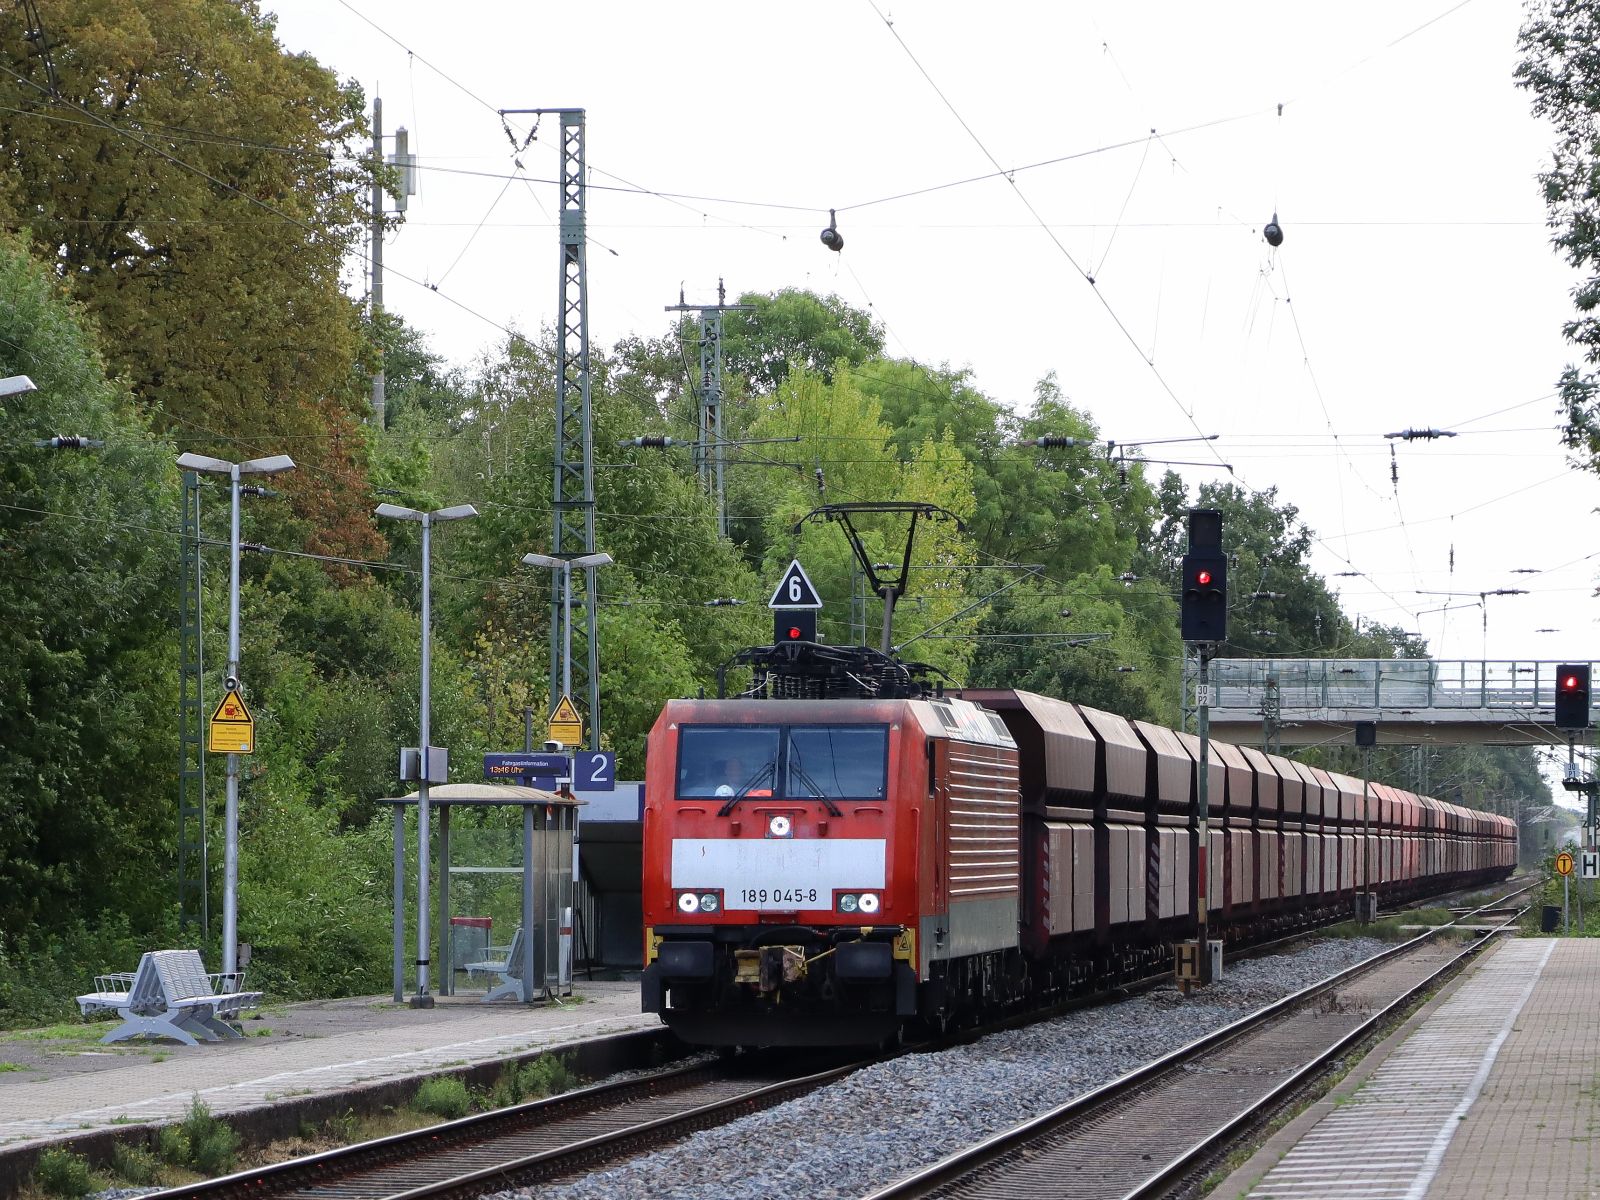 DB Cargo Lokomotive 189 045-8 Gleis 2 Bahnhof Empel-Rees 16-09-2022.

DB Cargo locomotief 189 045-8 spoor 2 station Empel-Rees 16-09-2022.